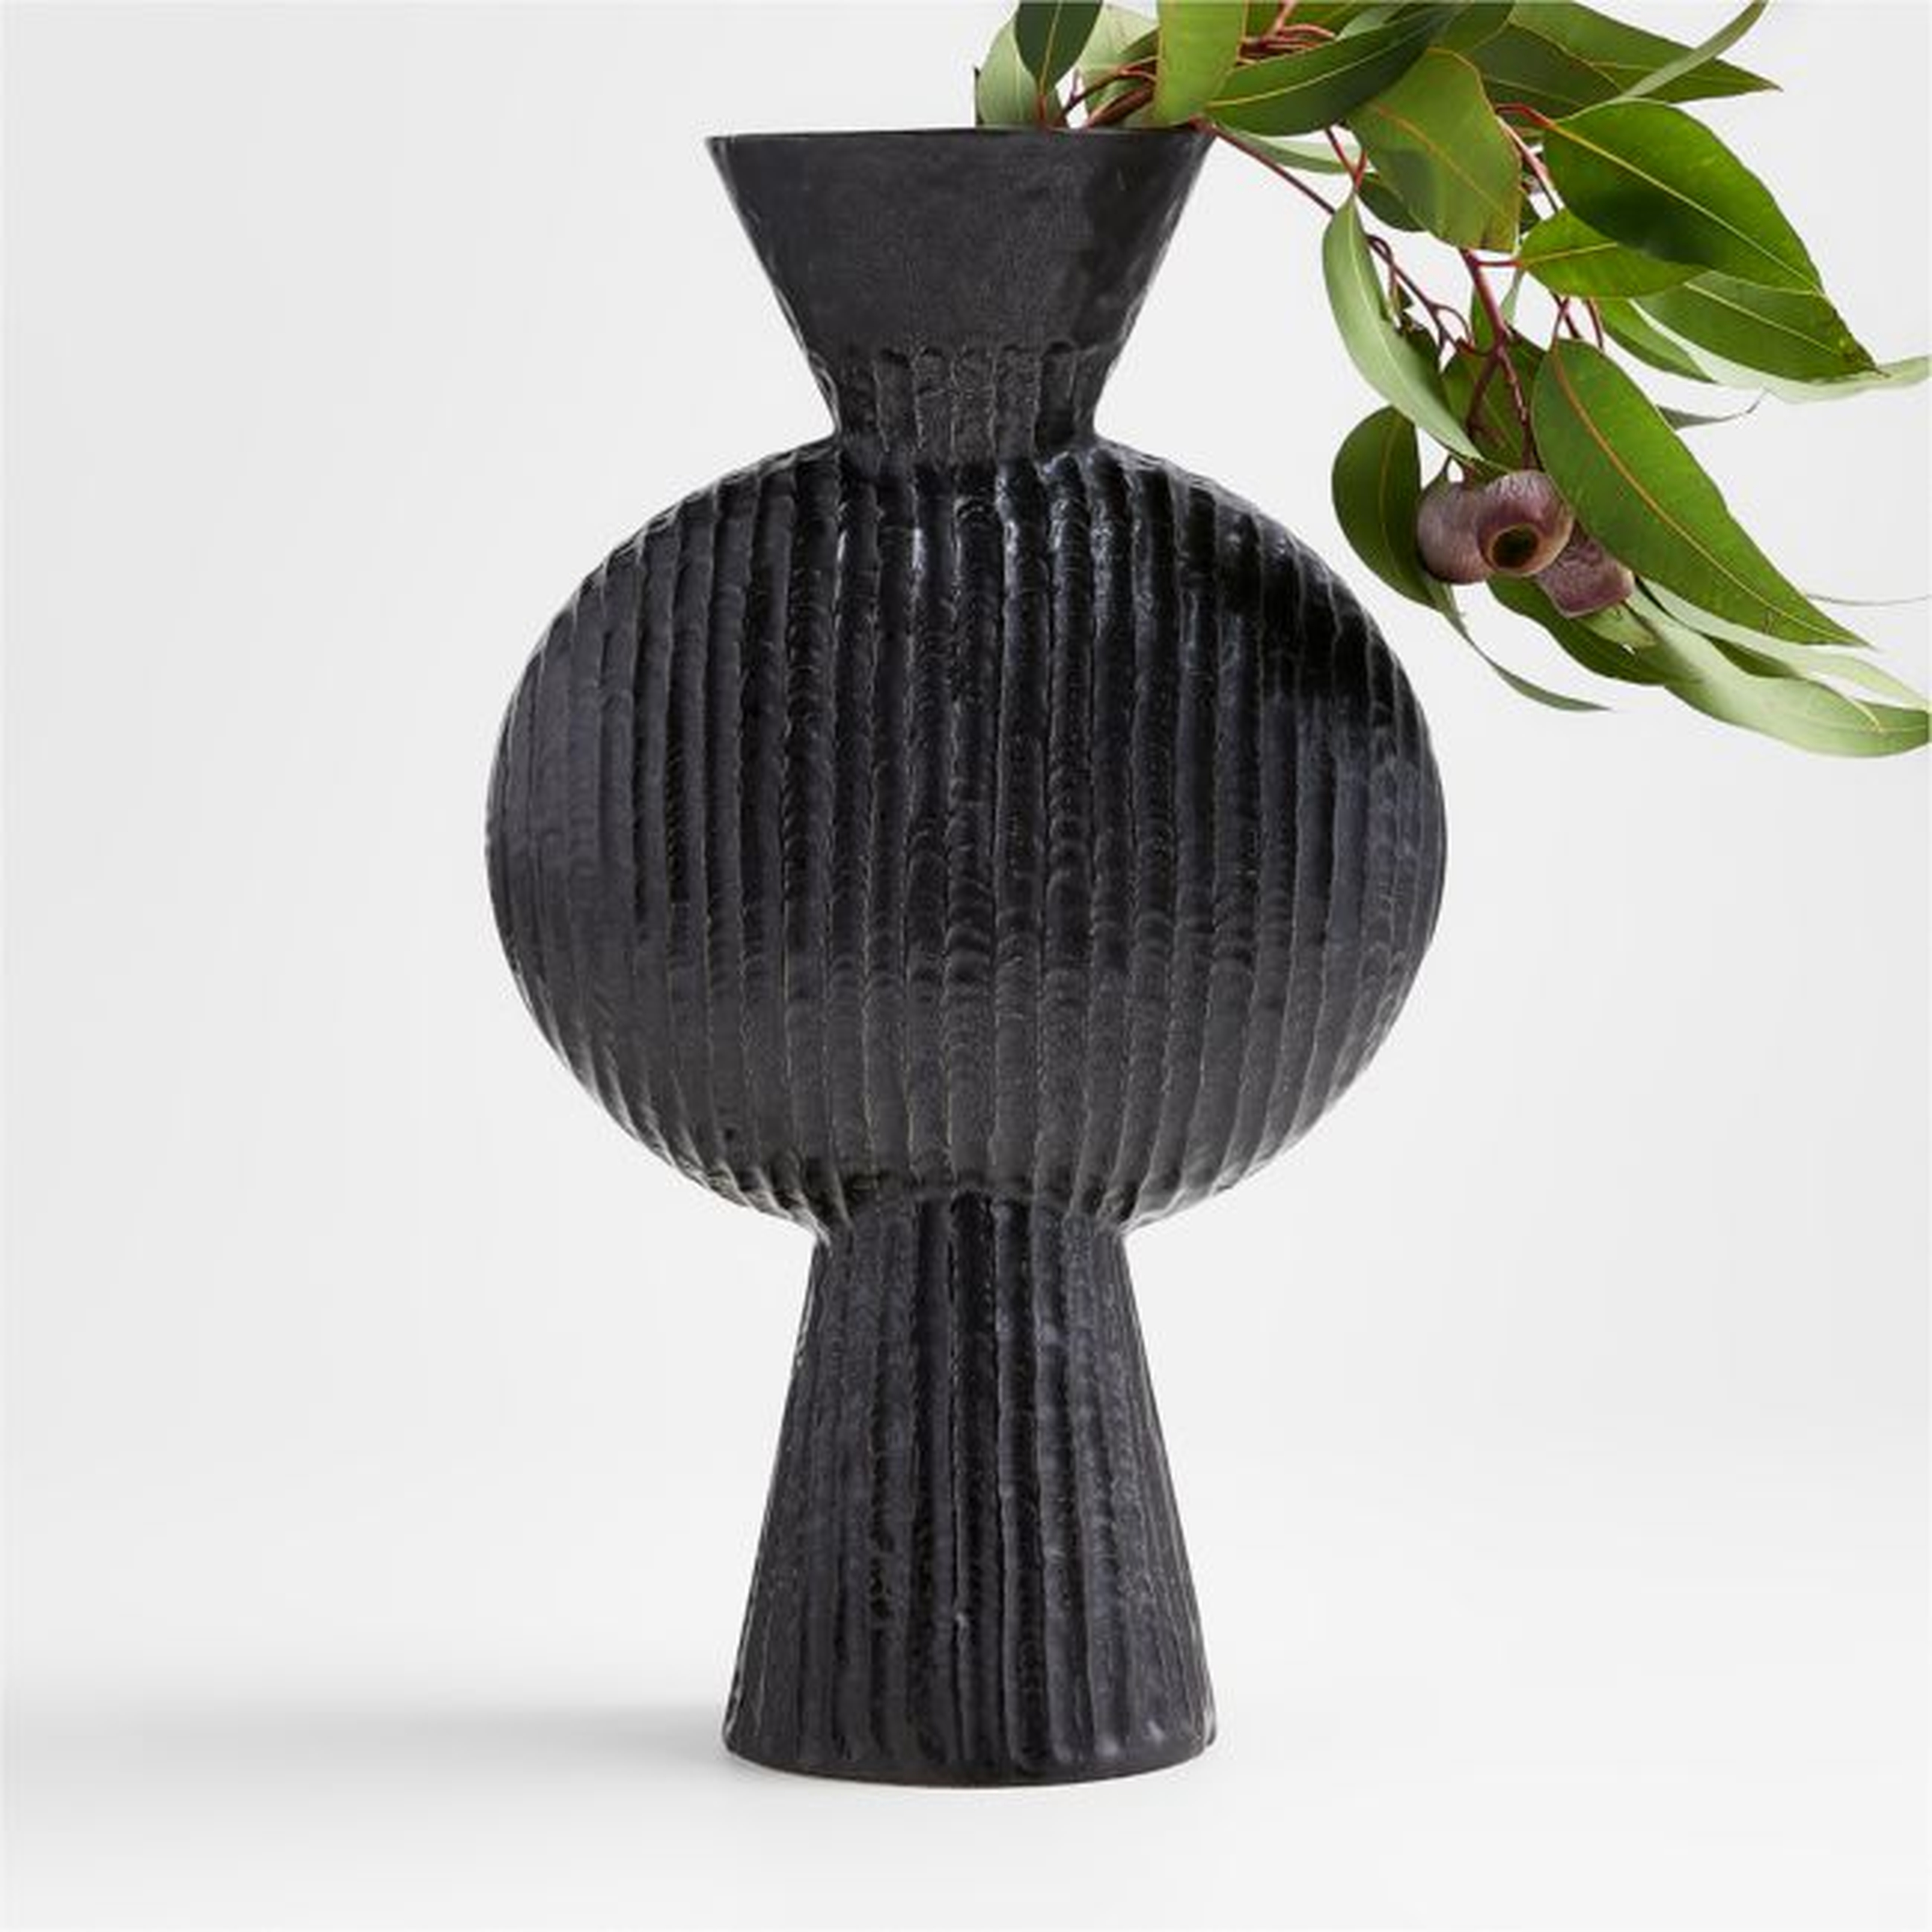 Priem Textured Vase, Black, Large - Crate and Barrel